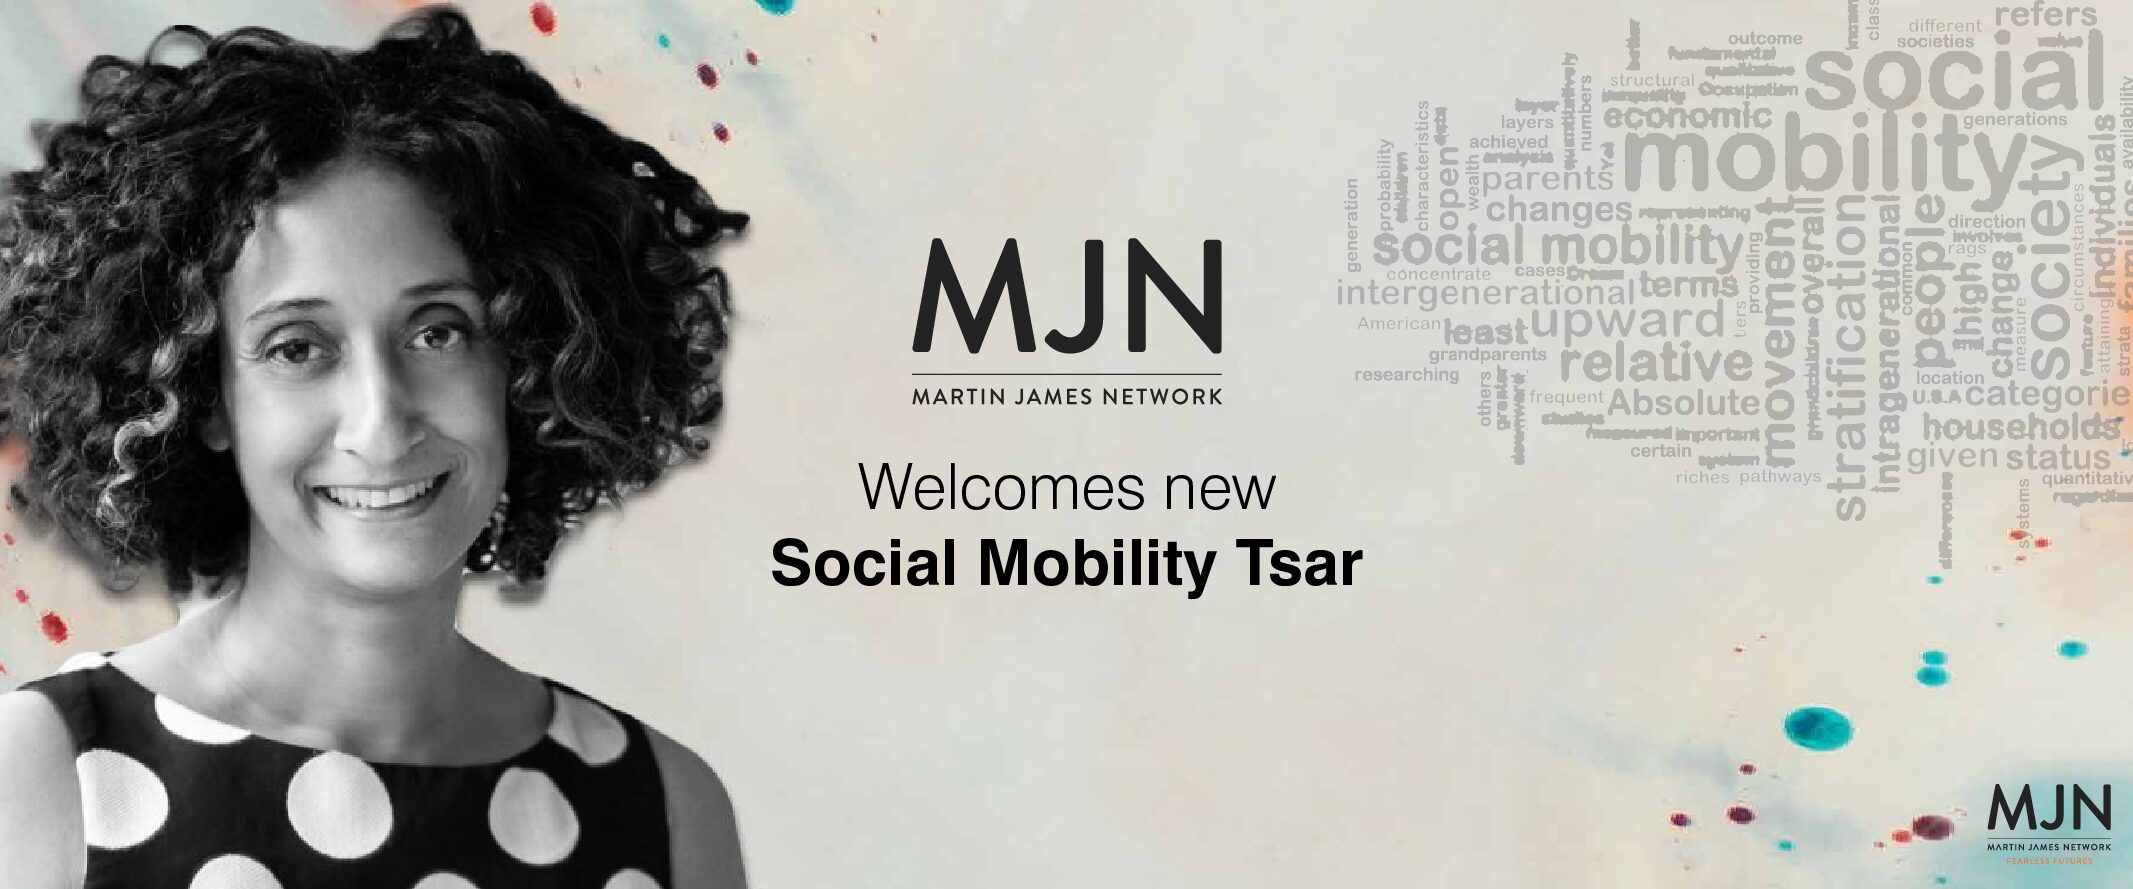 MJN welcomes new social mobility tsar